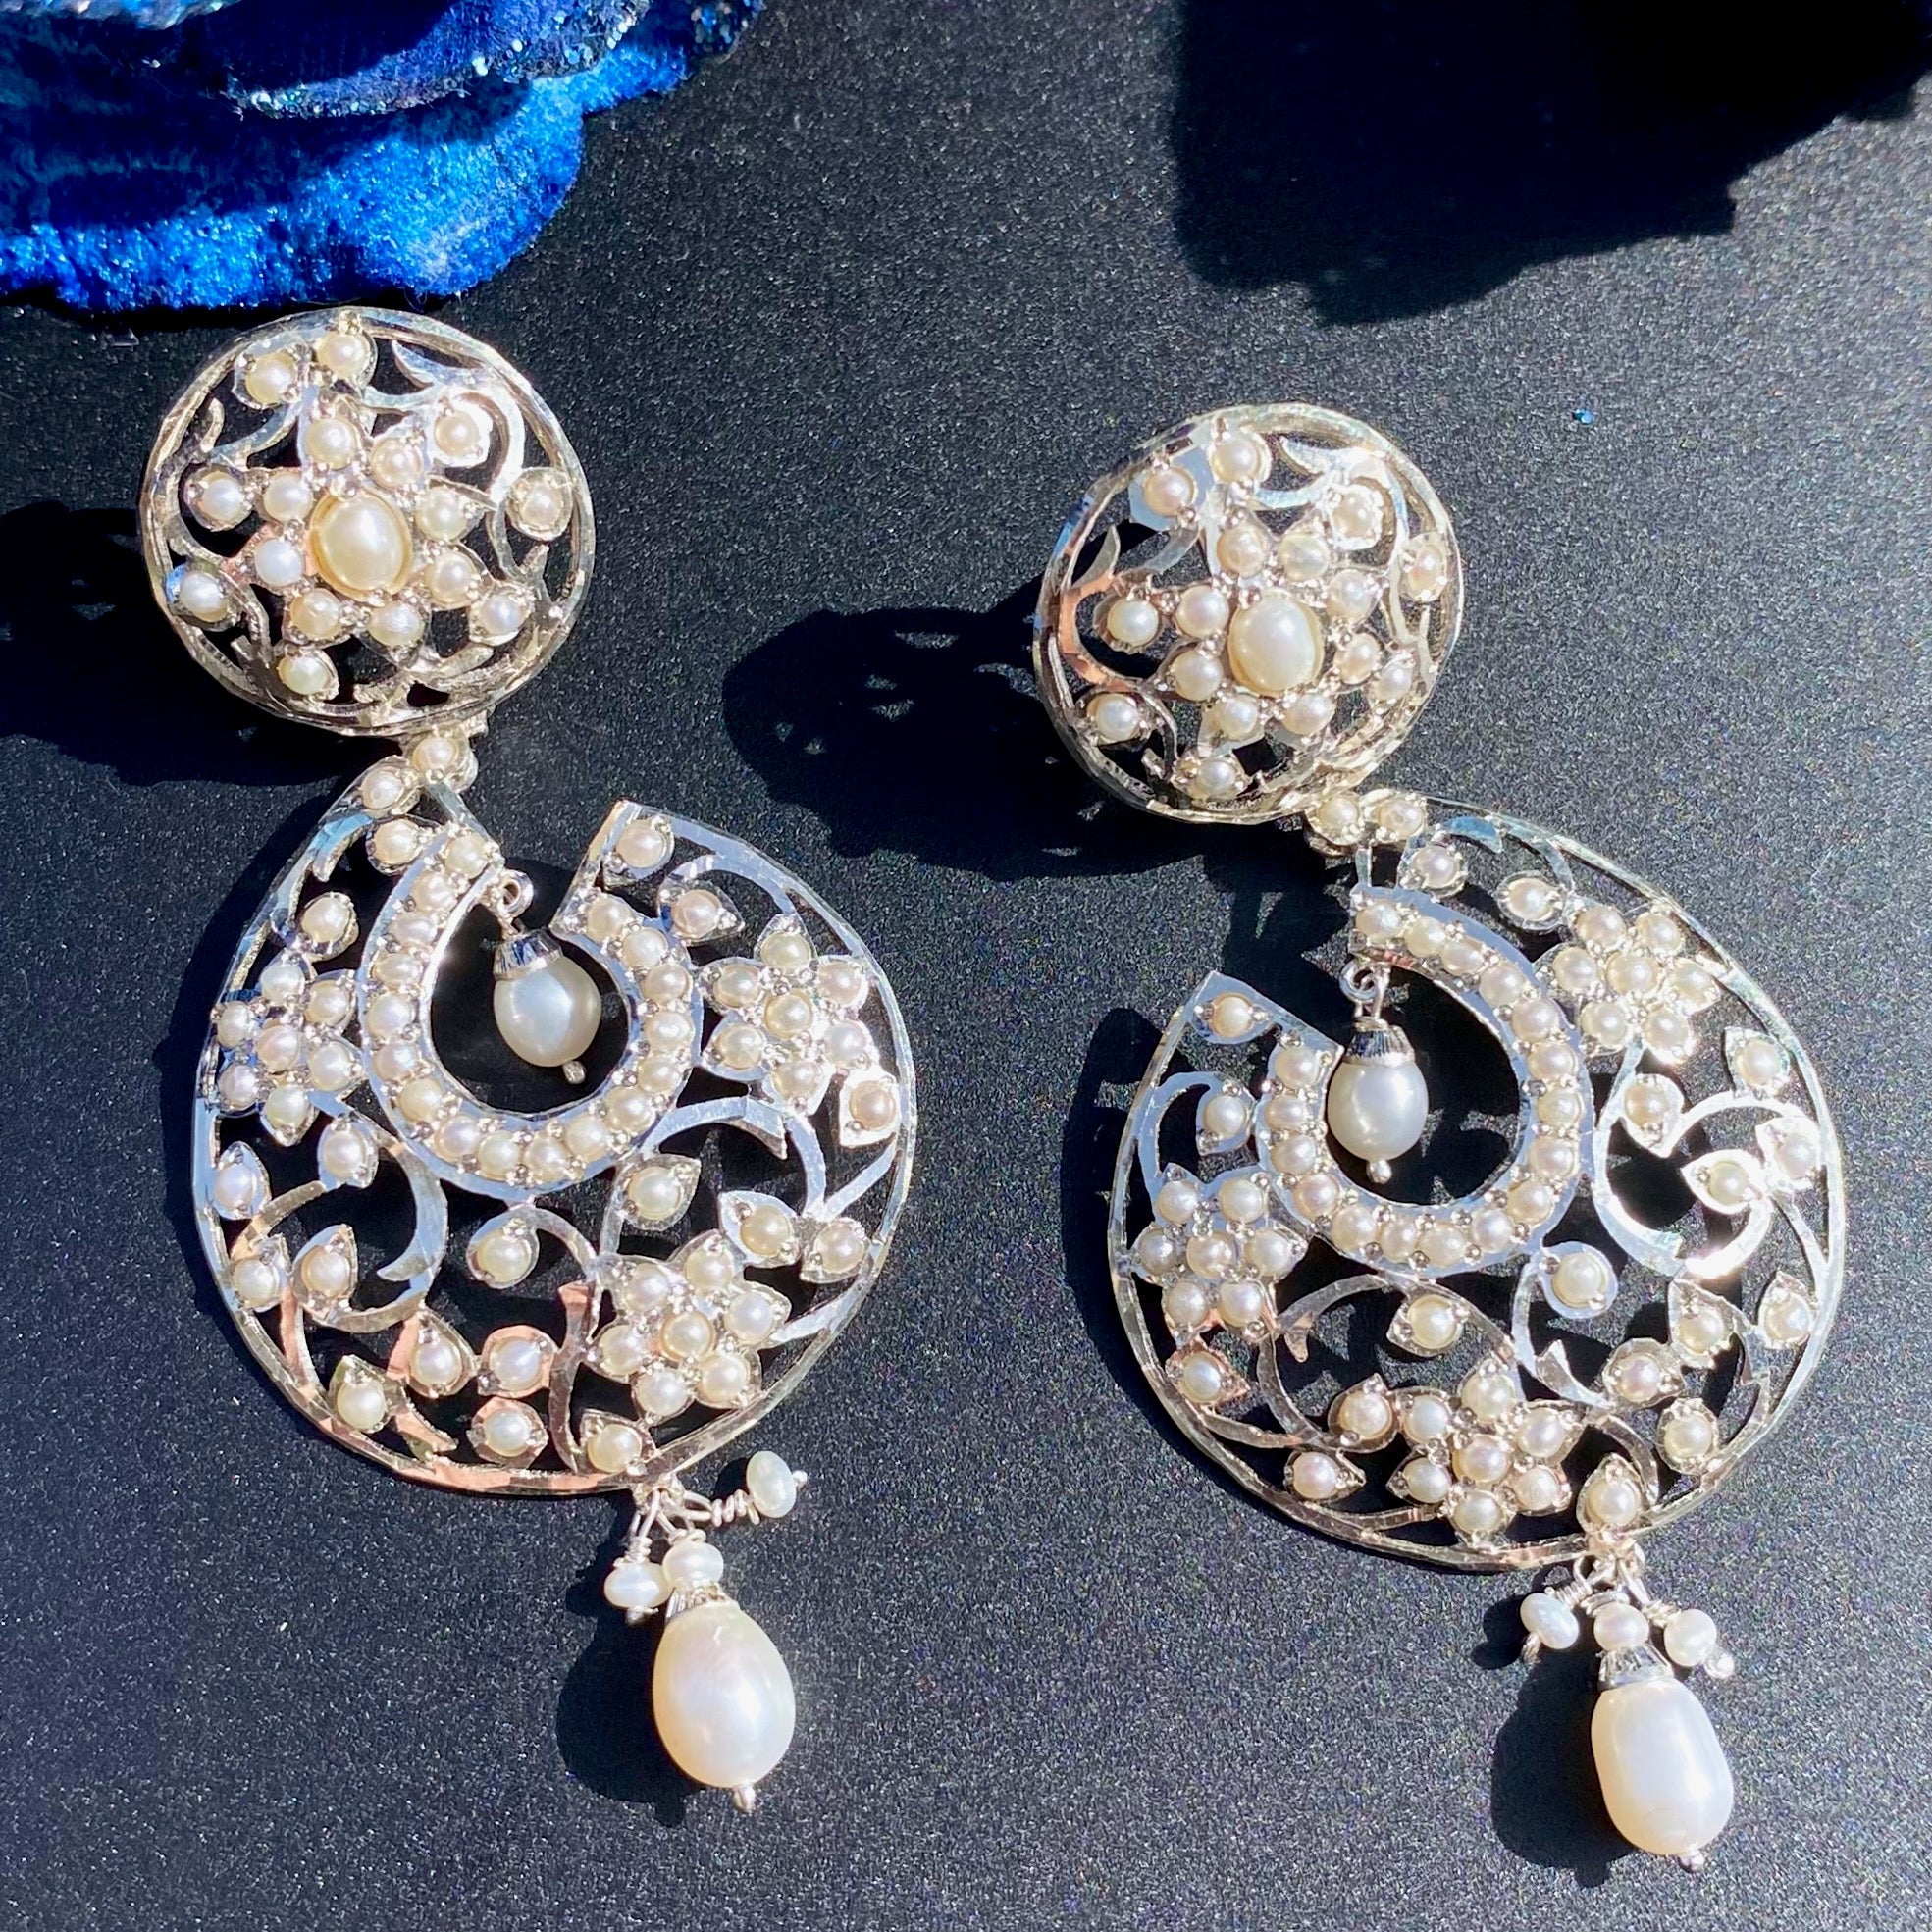 Edwardian Era Inspired Pearl Earrings | Sterling Silver & Pearls